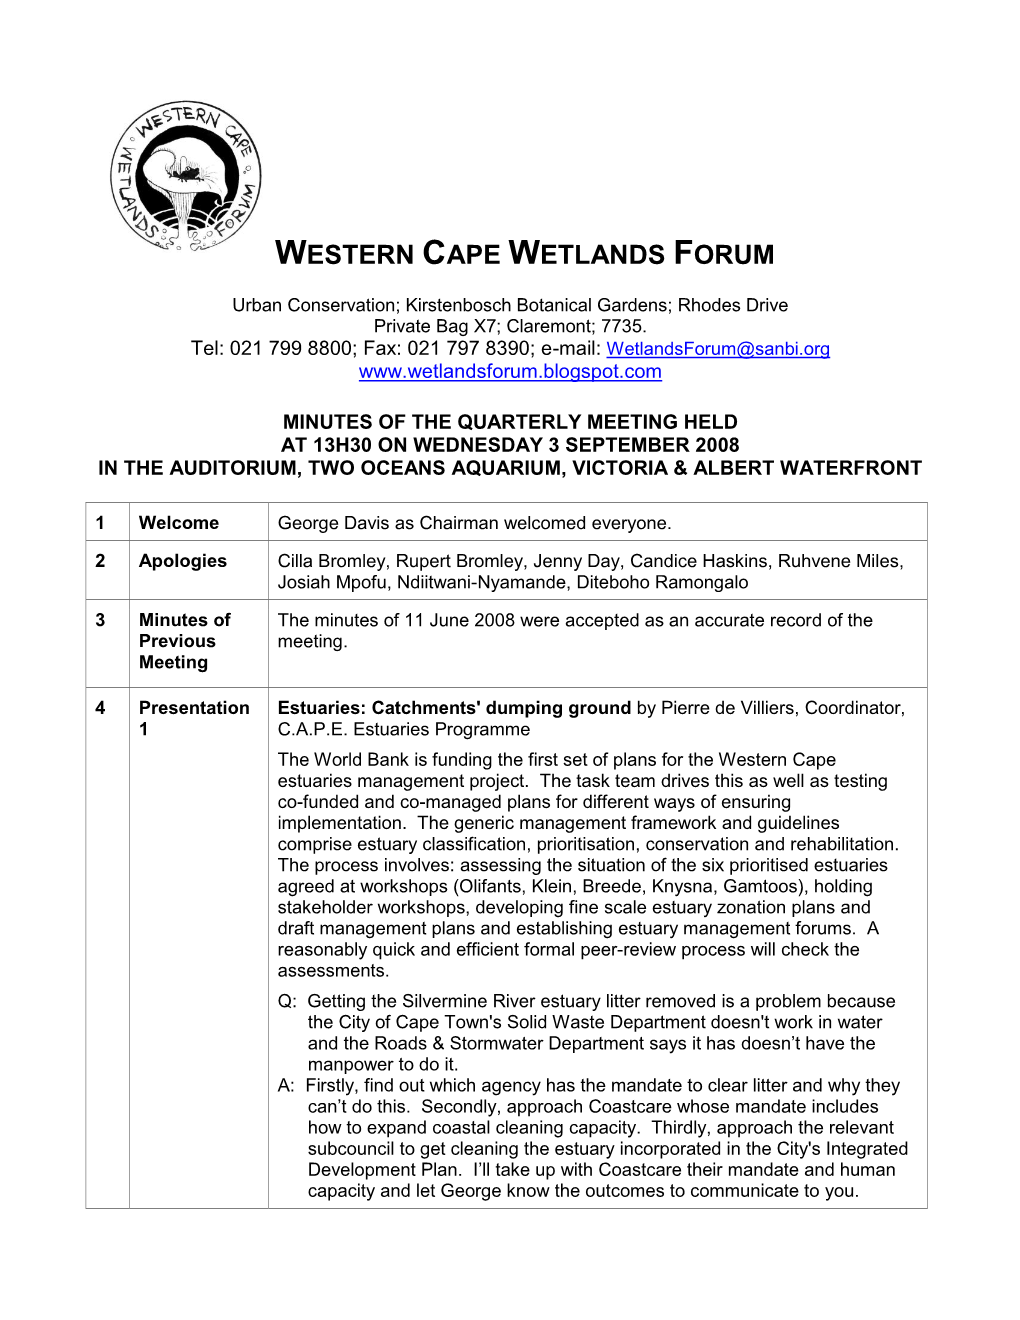 Western Cape Wetland Forum Minutes